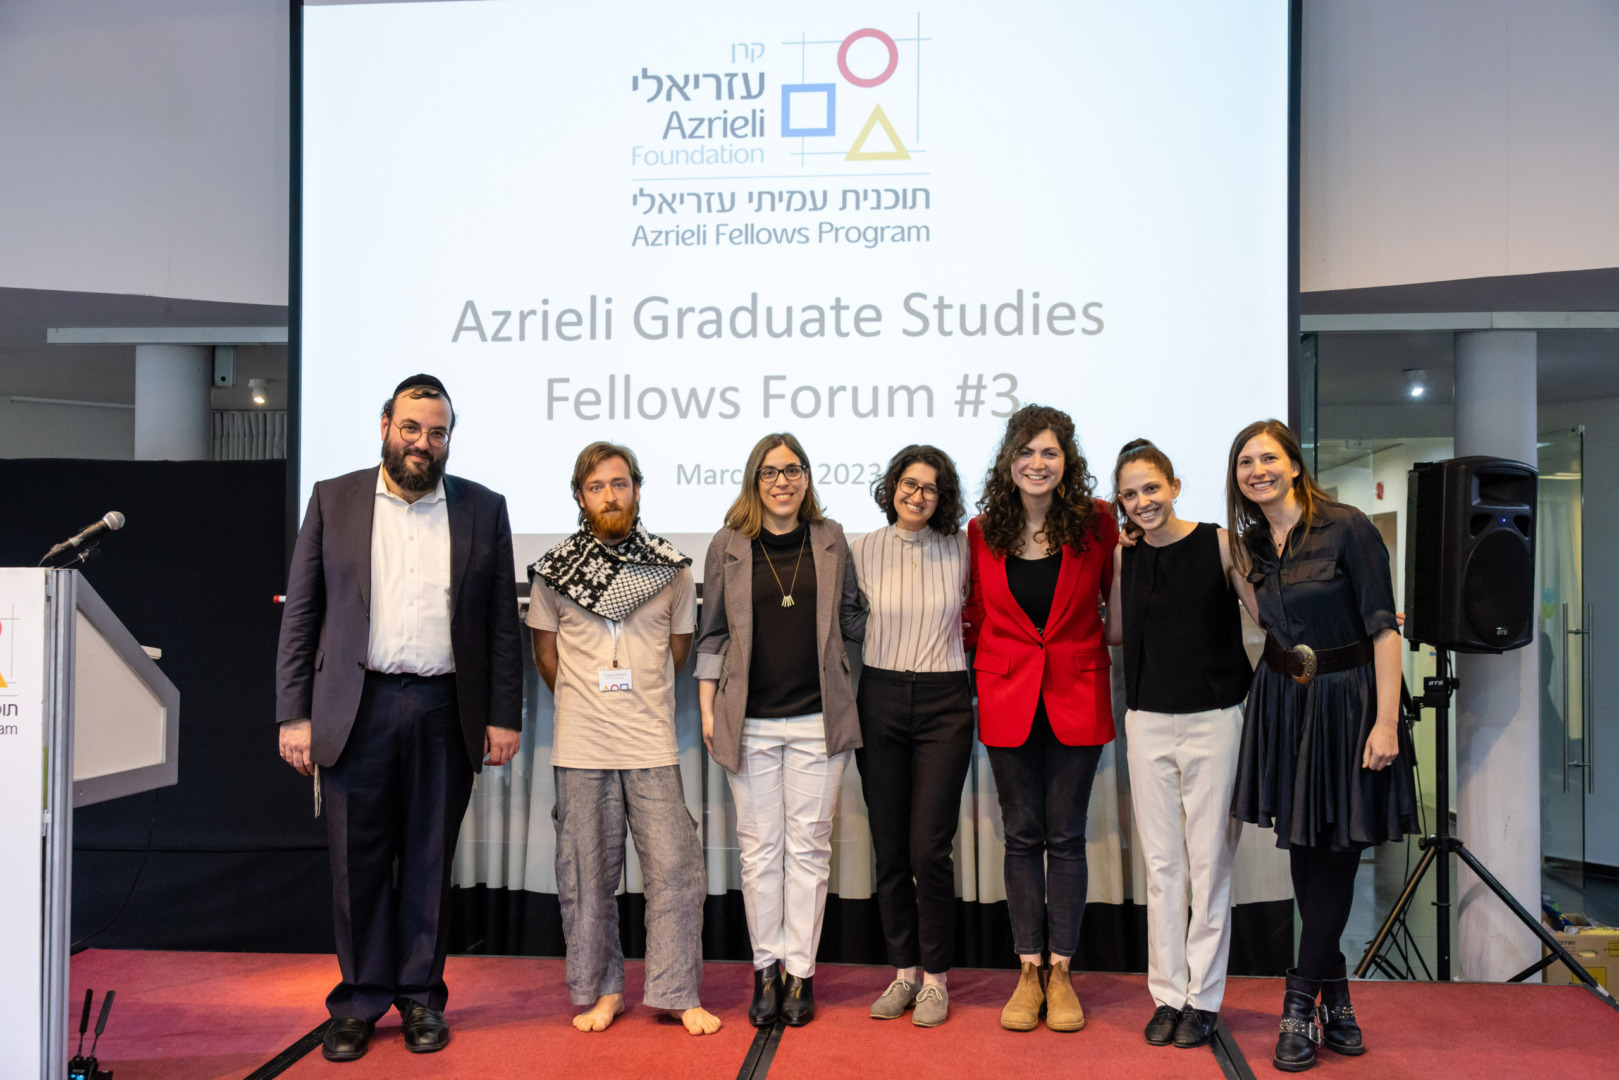 Azrieli Graduate Studies Fellows Forum #3